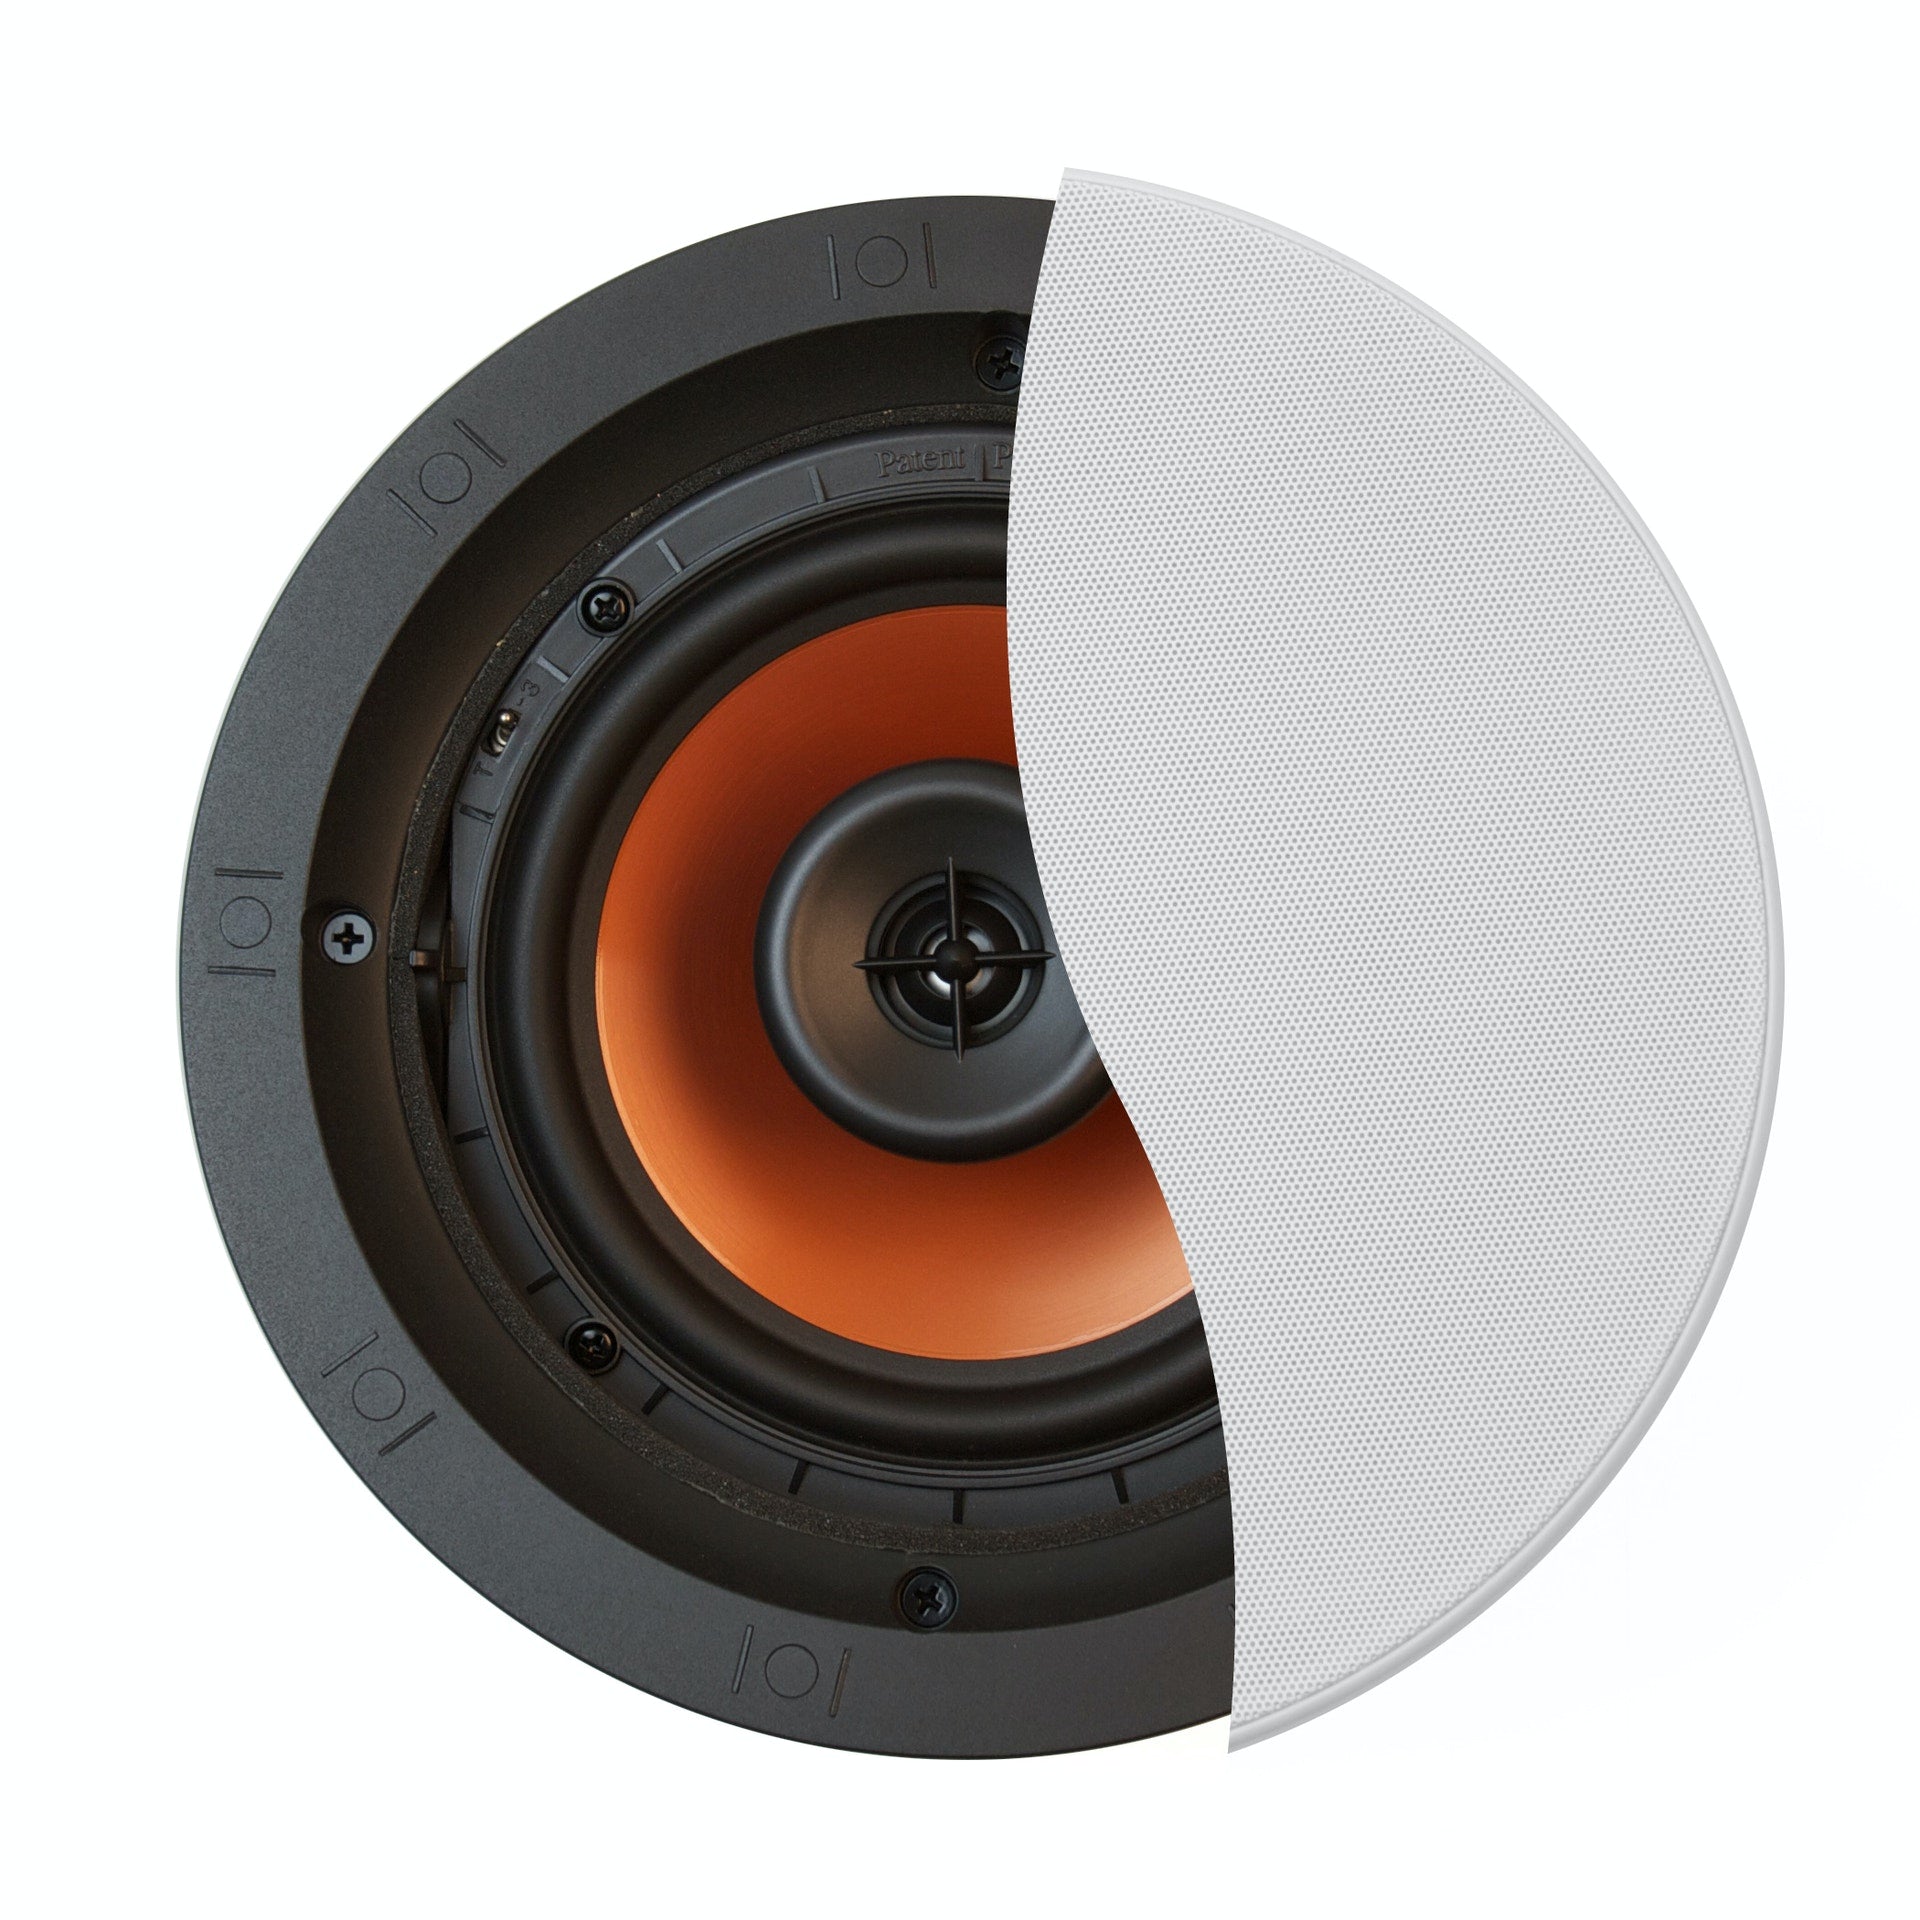 CDT-3650-CII Pivoting 6.5" 2-Way In-Ceiling Speaker with Aluminum Tweeter (Single)